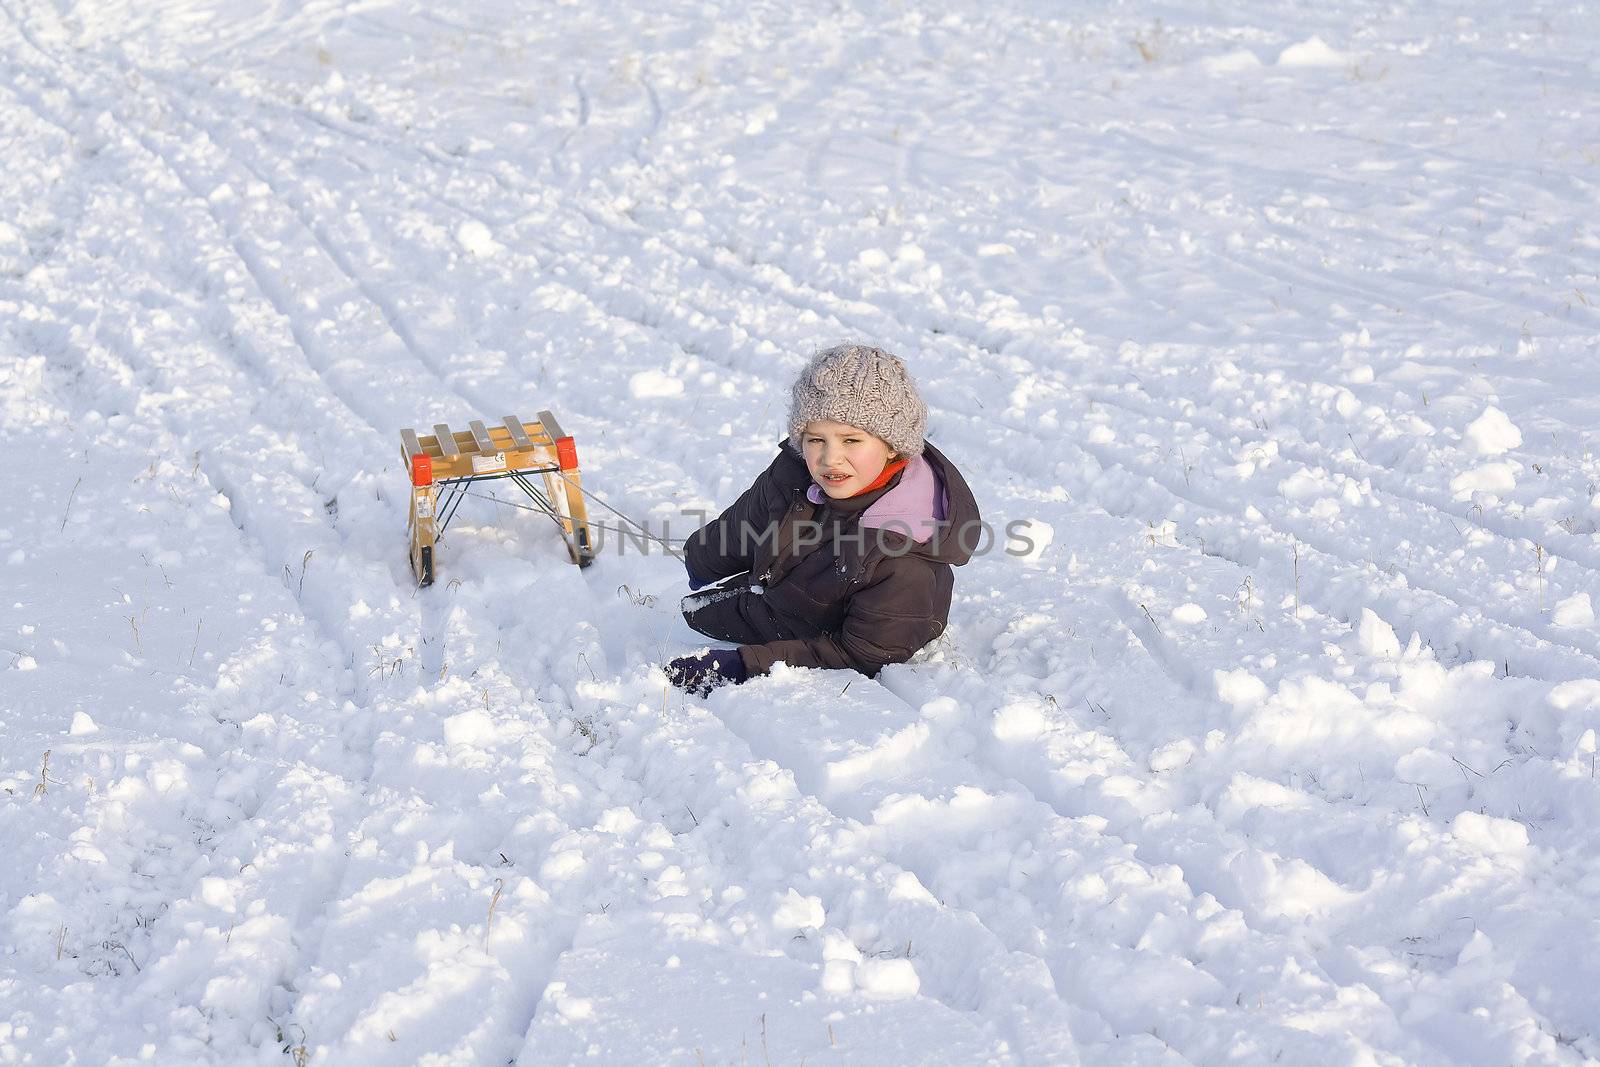  Little girl on snow by miradrozdowski